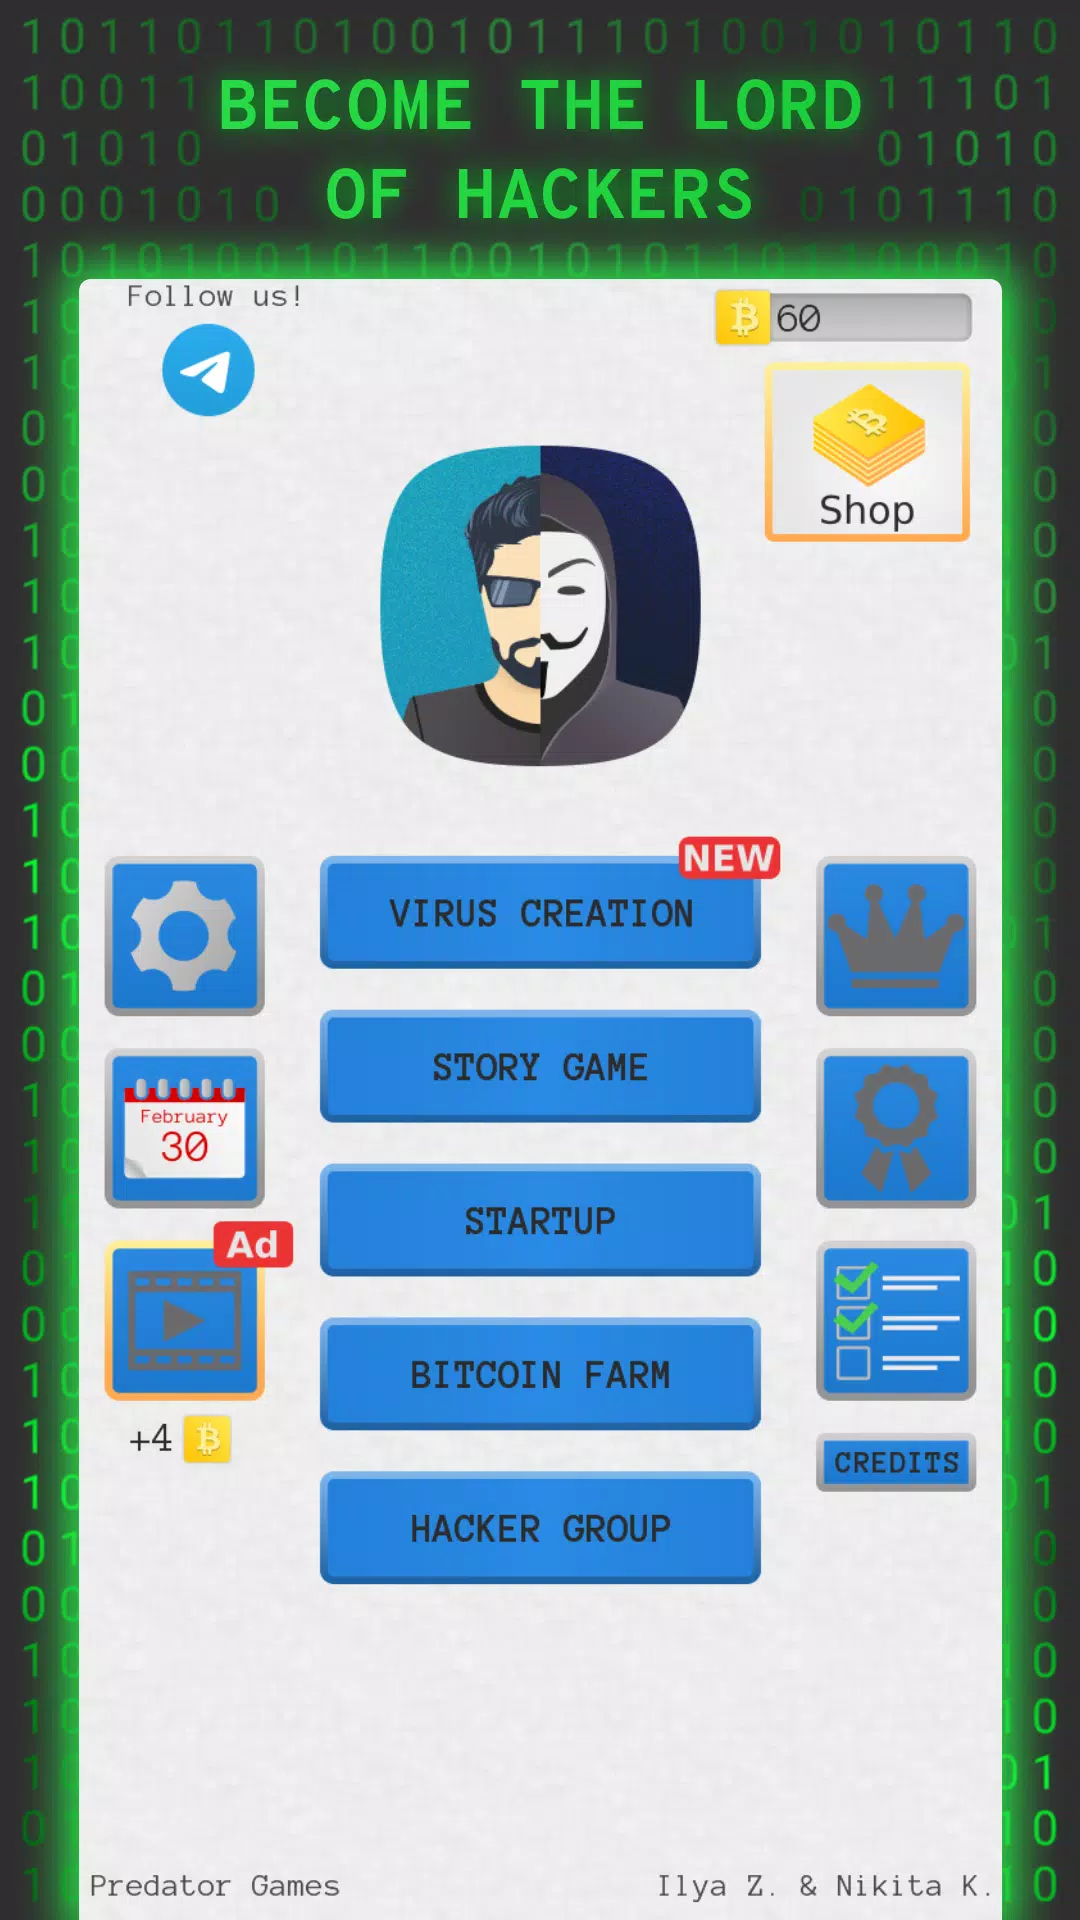 Hacker Simulator PC Tycoon - Apps on Google Play